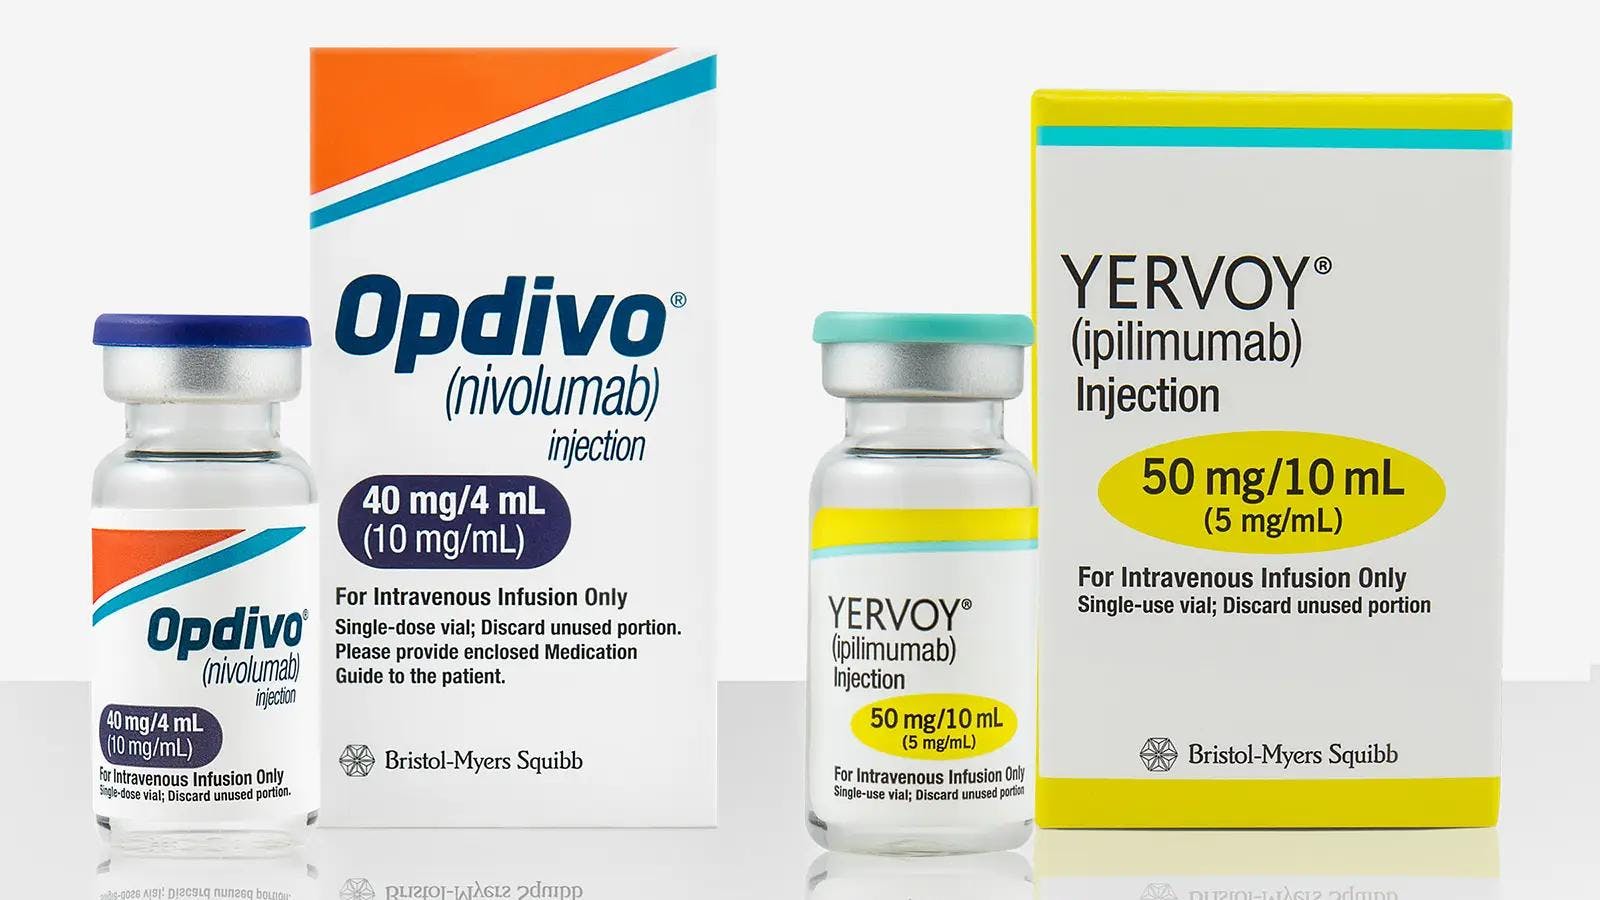 Opdivo and Yervoy | Image credit: Bristol Myers Squibb